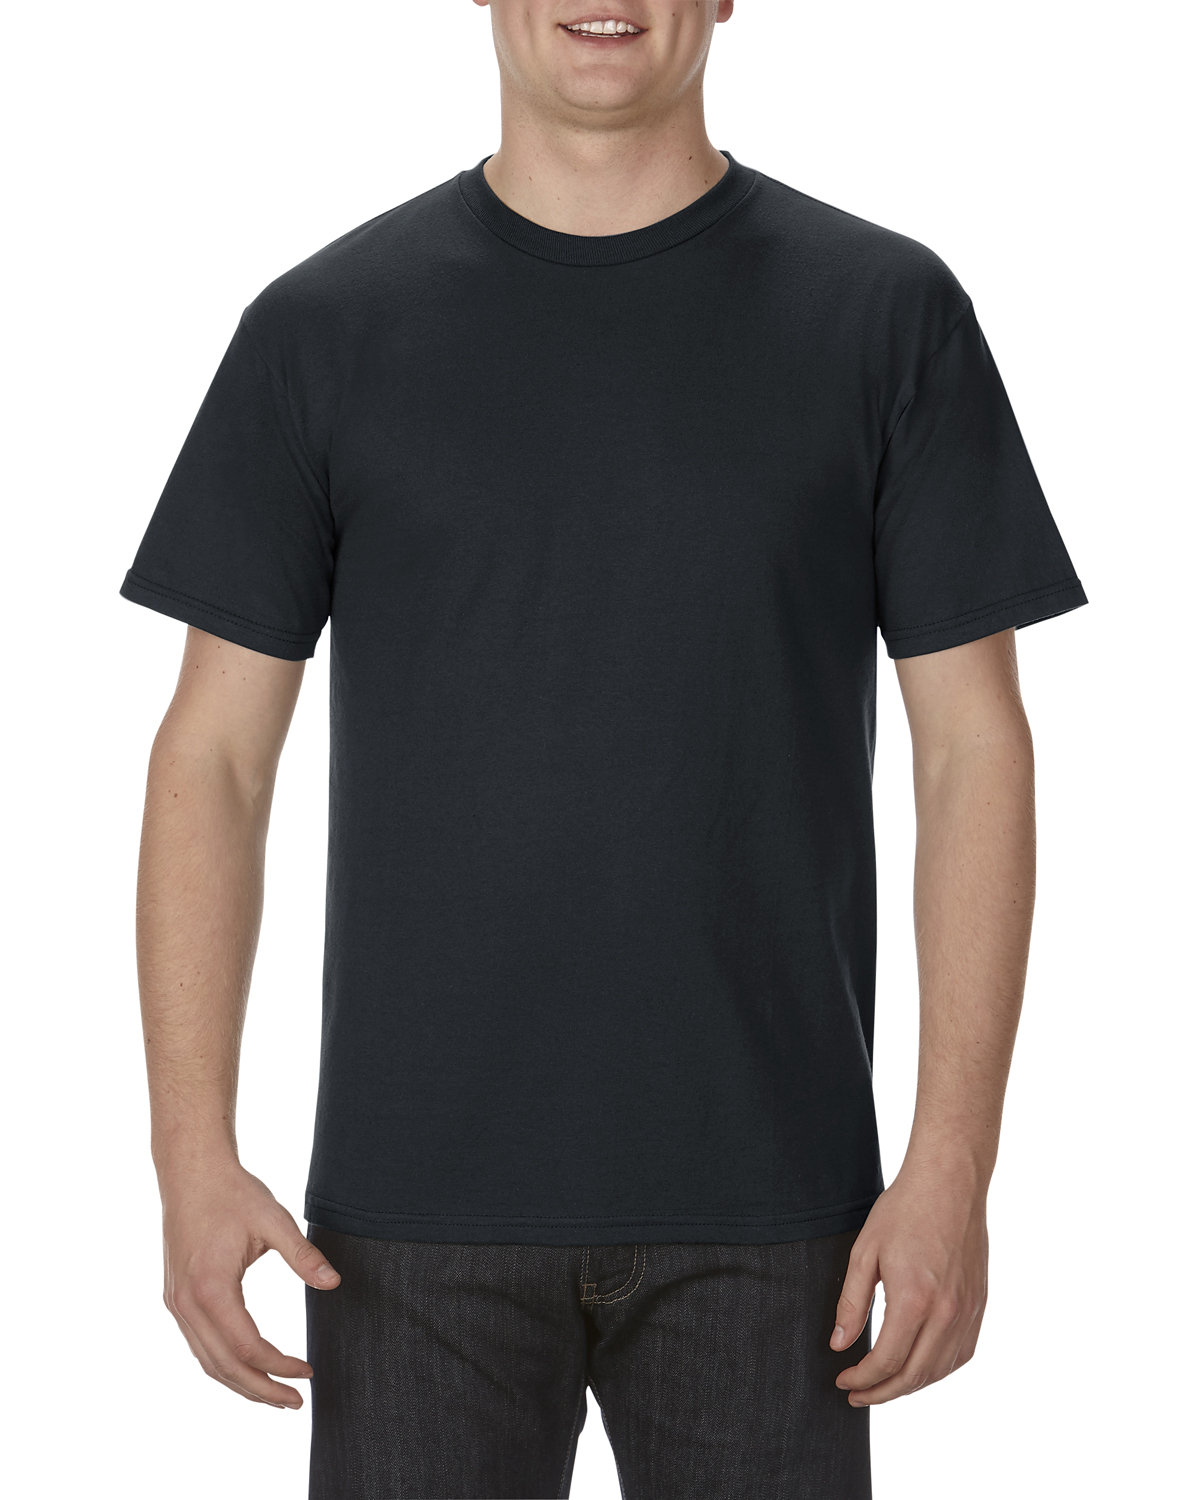 American Apparel Adult 5.1 oz., 100% Soft Spun Cotton T-Shirt BLACK 